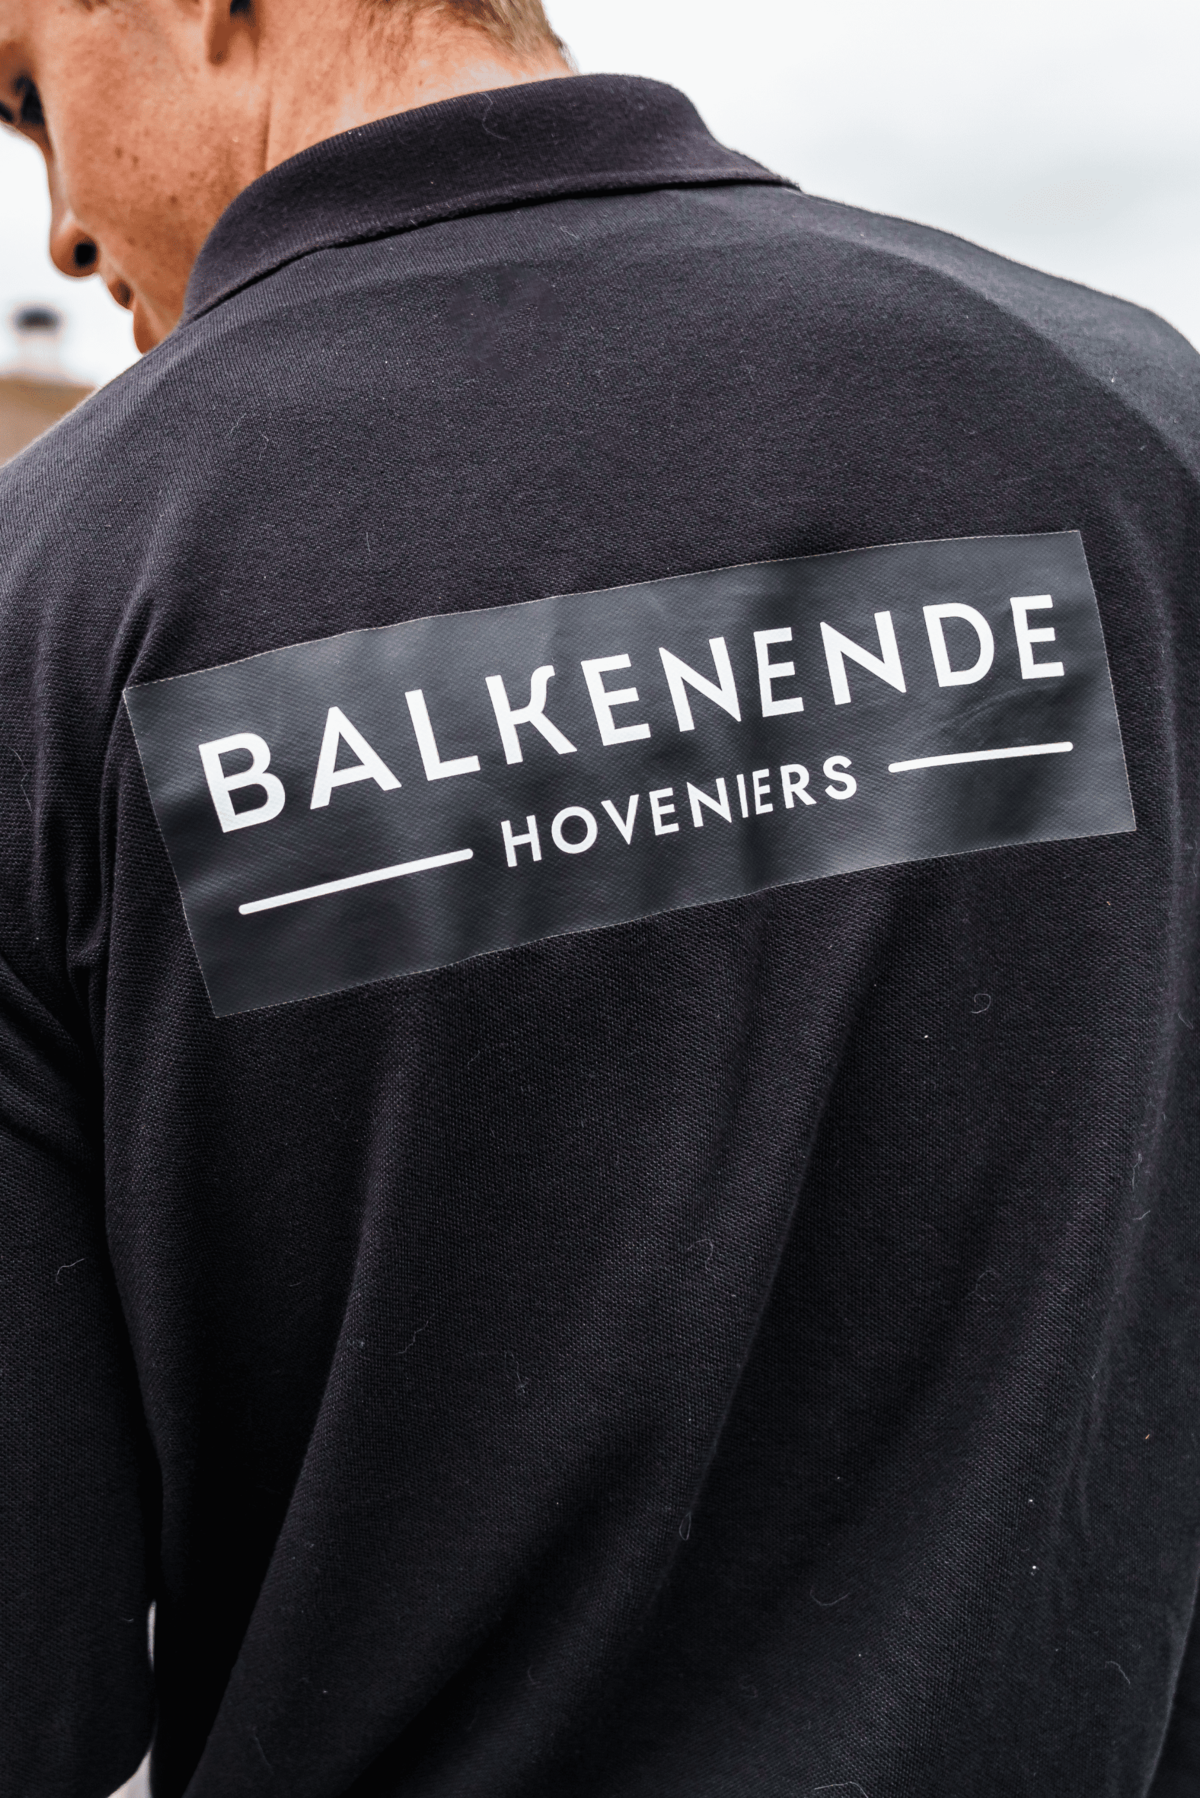 Logo Balkenende Hoveniers op rug Expert Mike